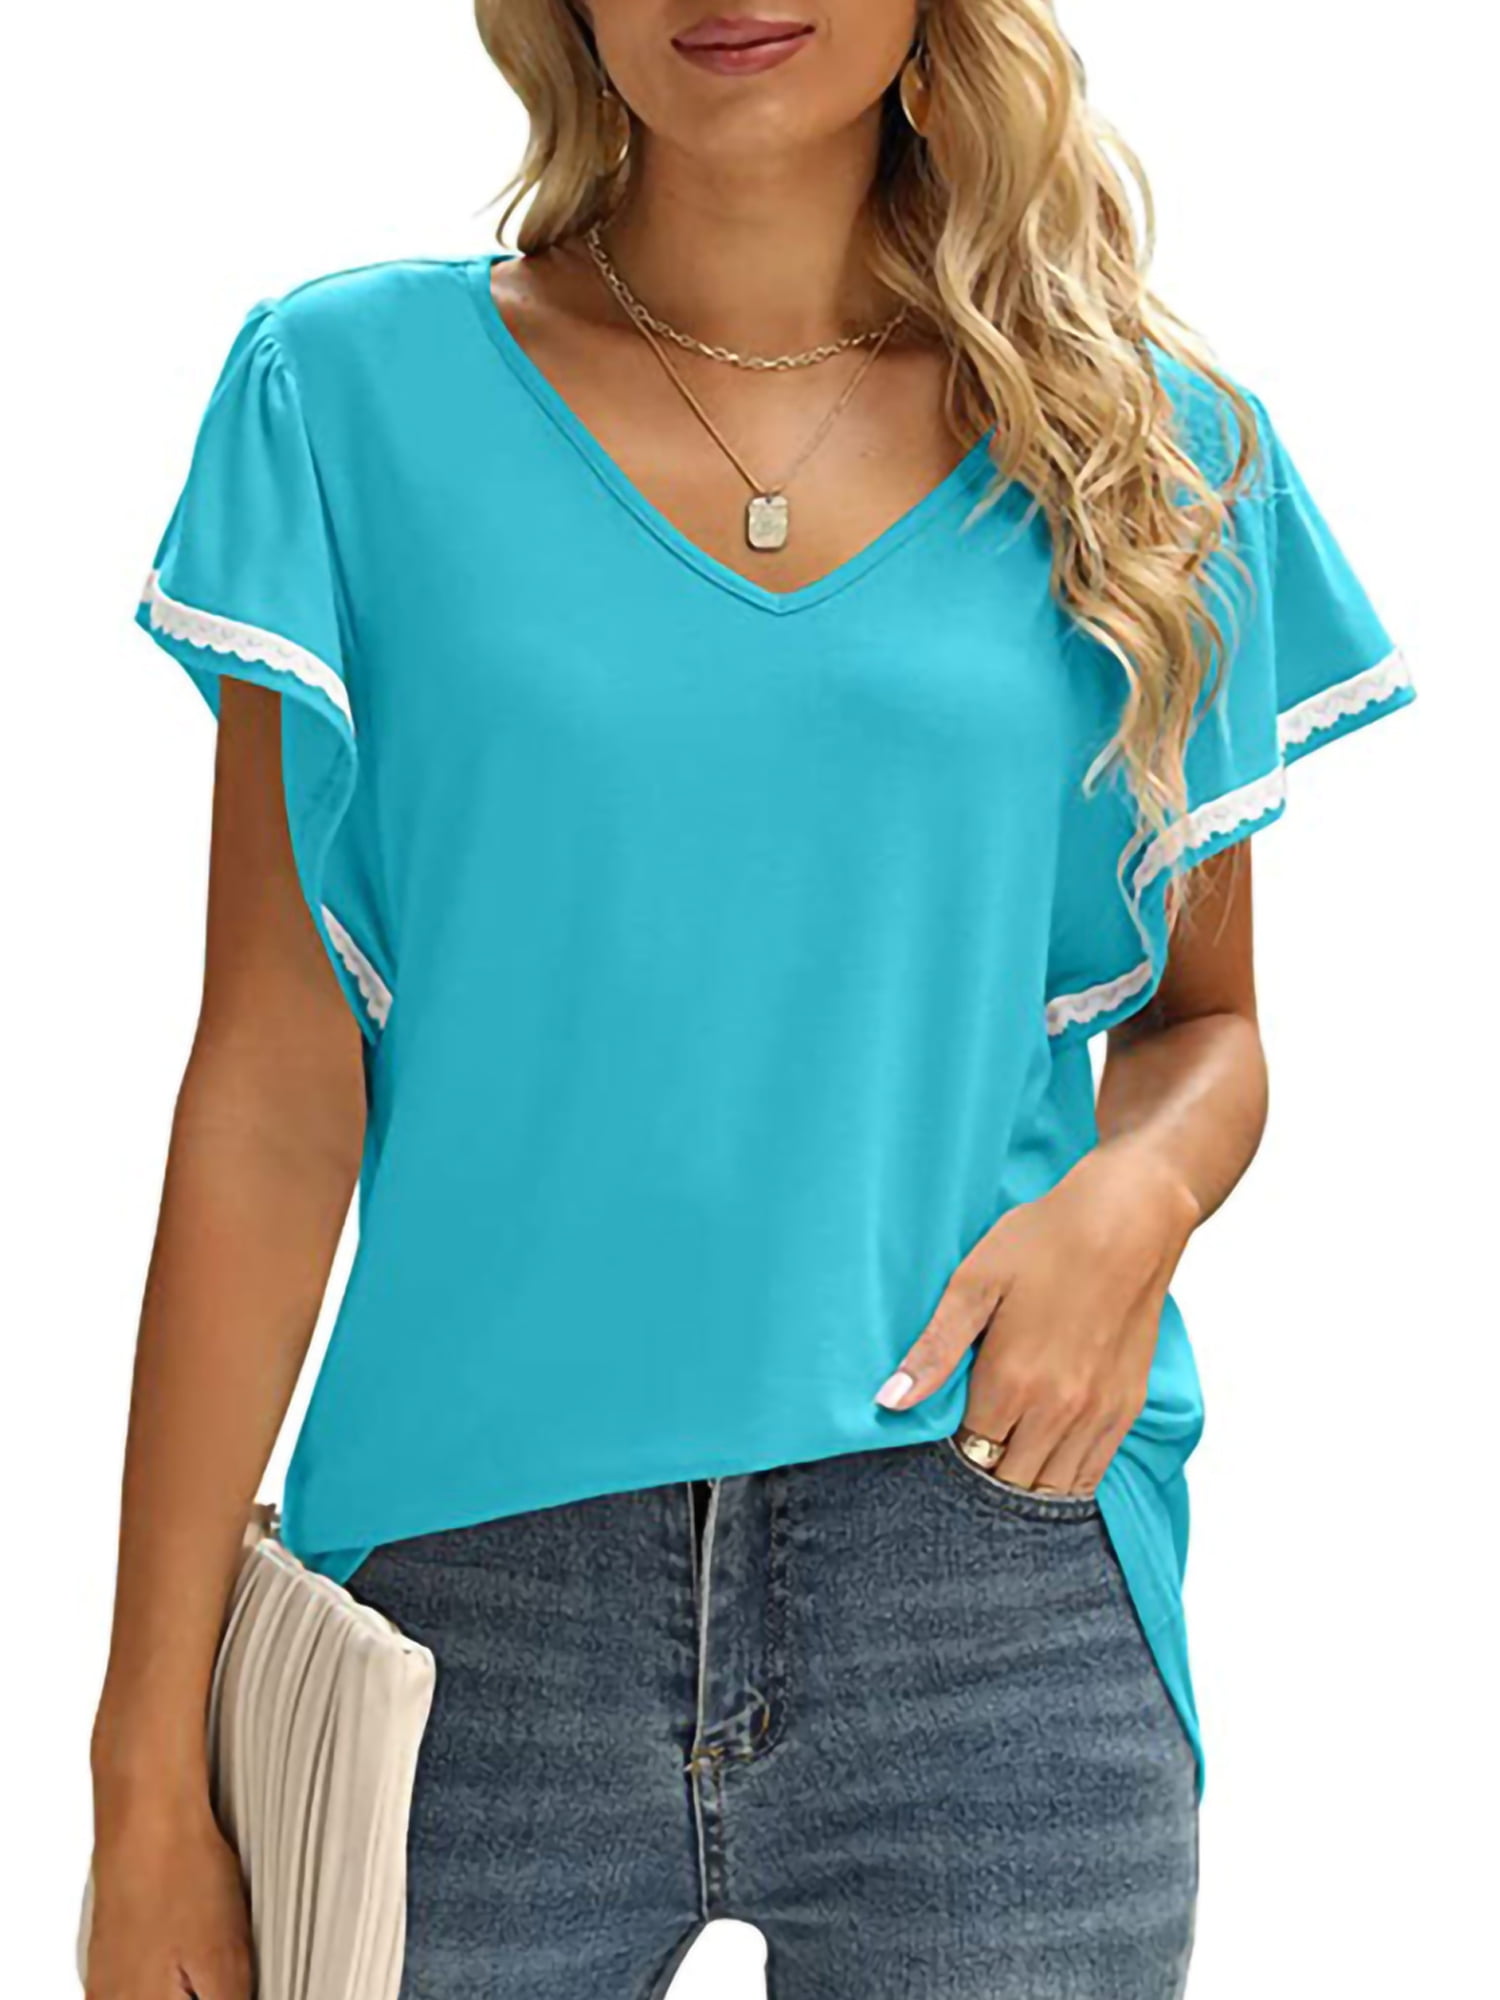 Capreze Ruffle Pullover T Shirt Blouses for Women Summer Loose Baggy ...